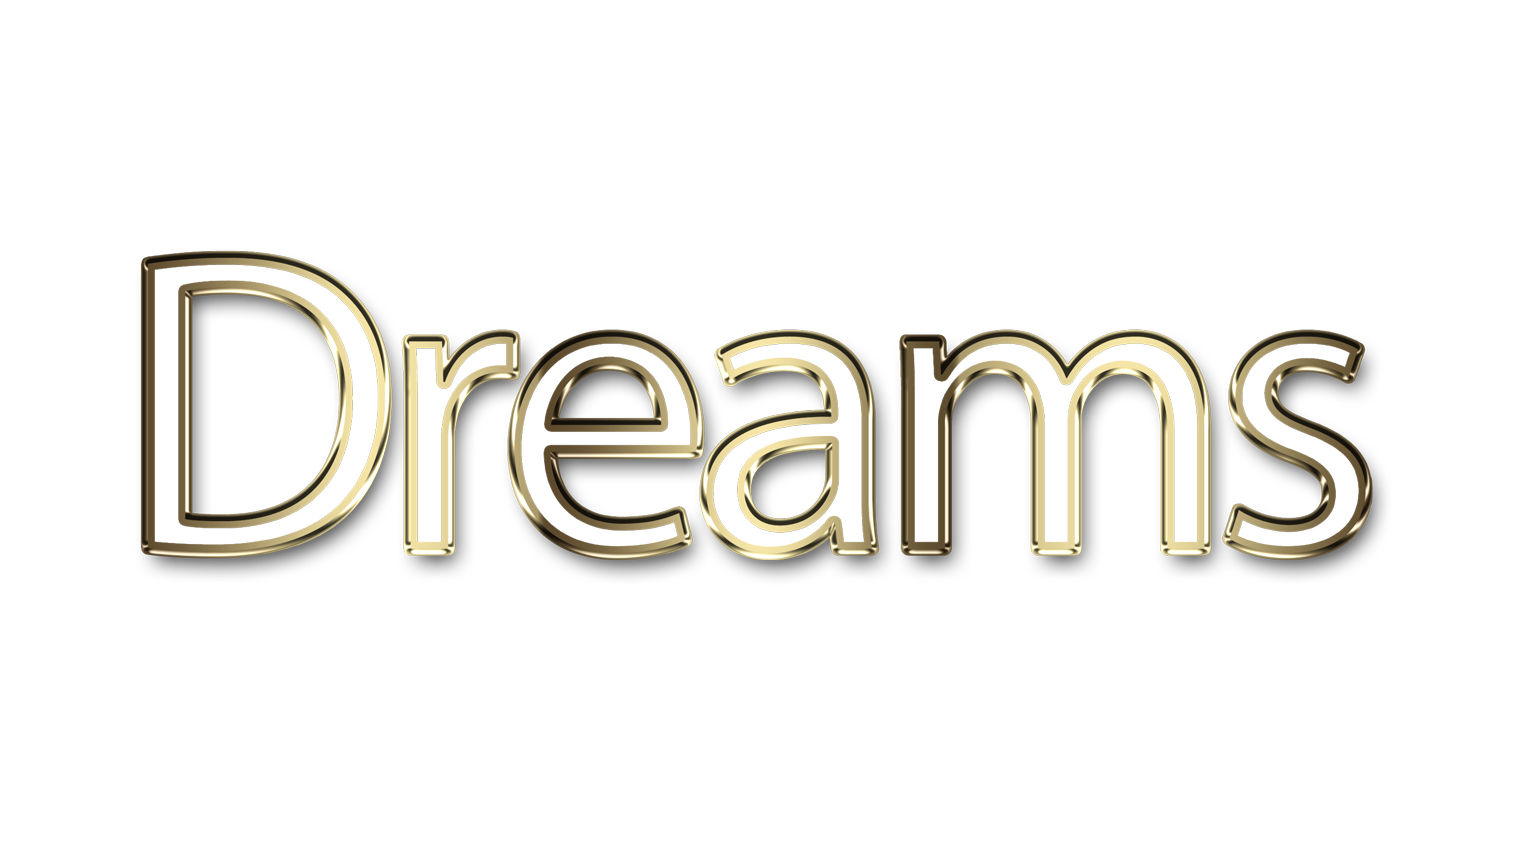 Dreams png, word Dreams png, Dreams word png, Dreams text png, Dreams letters png, Dreams word art typography PNG images, transparent png